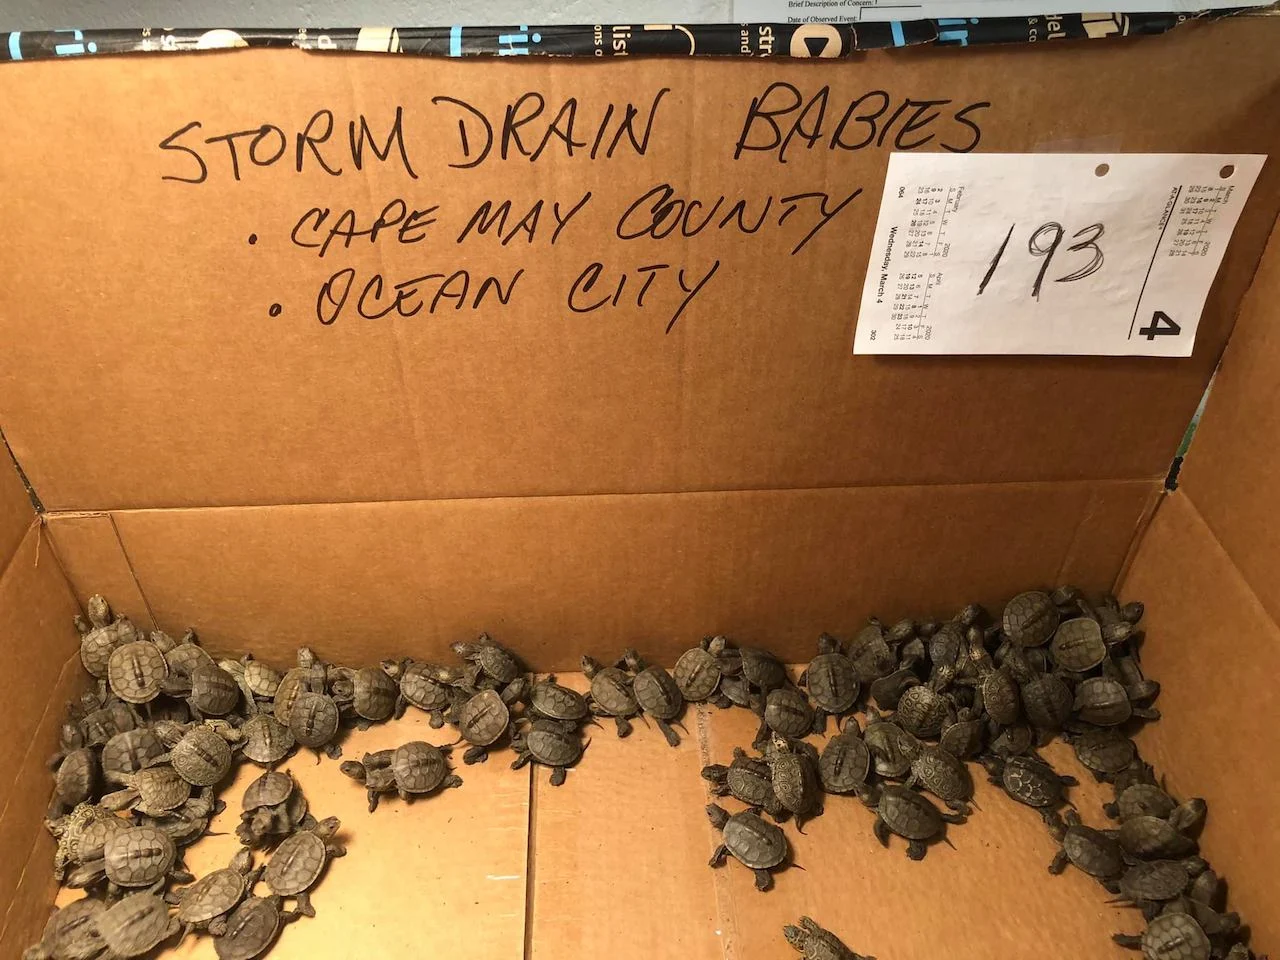 Storm drain rescue turtles/Lester Block